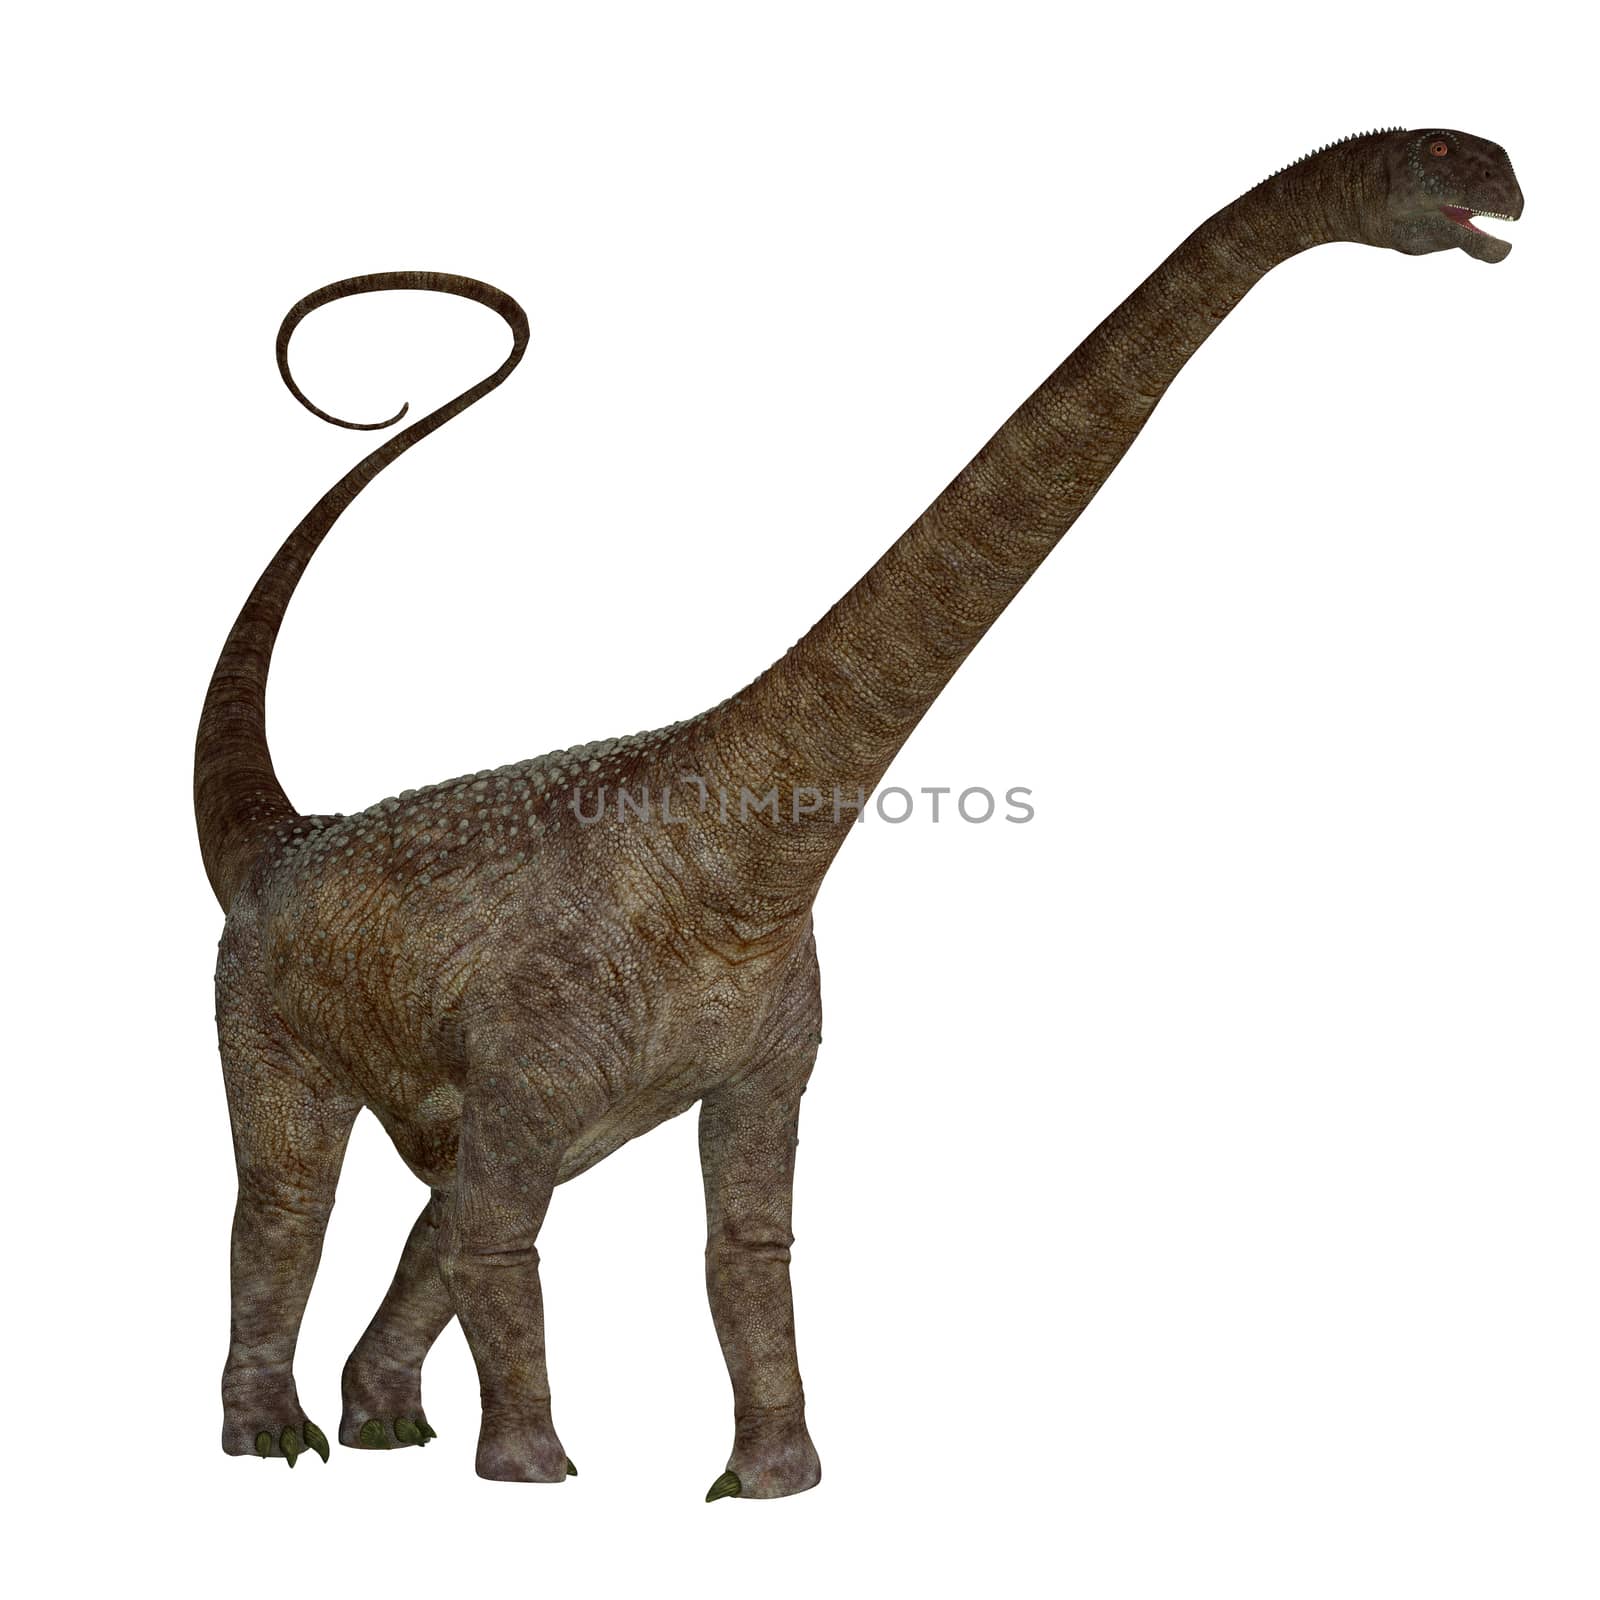 Malawisaurus Dinosaur on White by Catmando